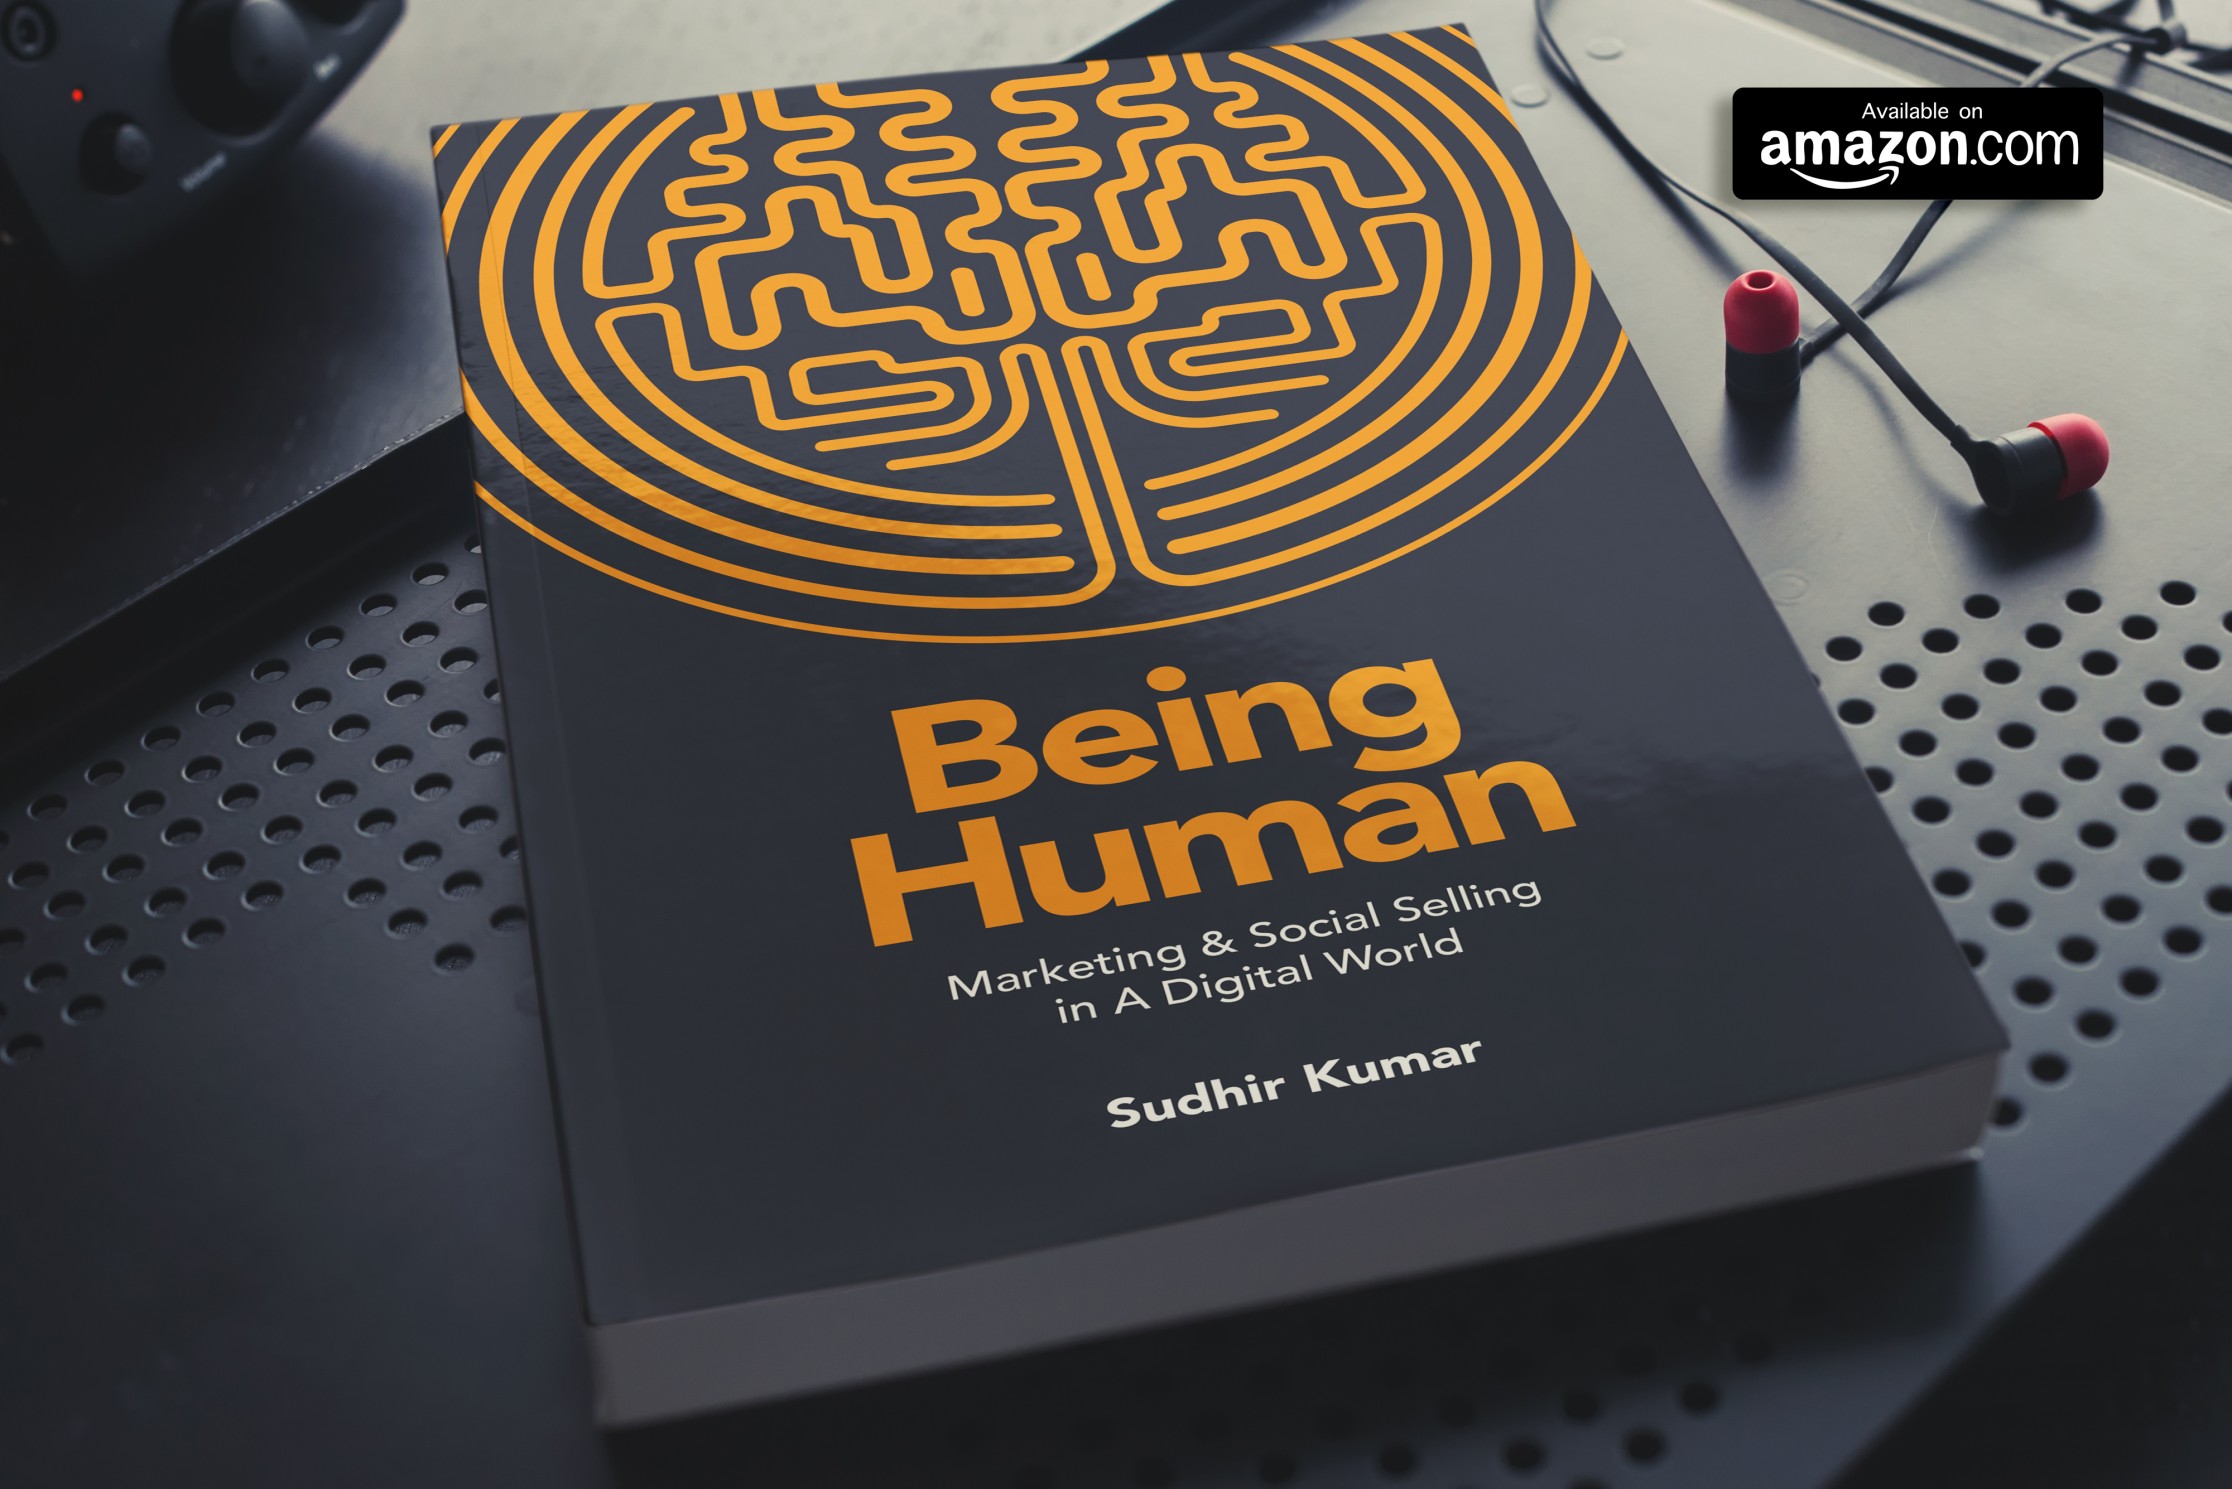 Being Human by Sudhir Kumar